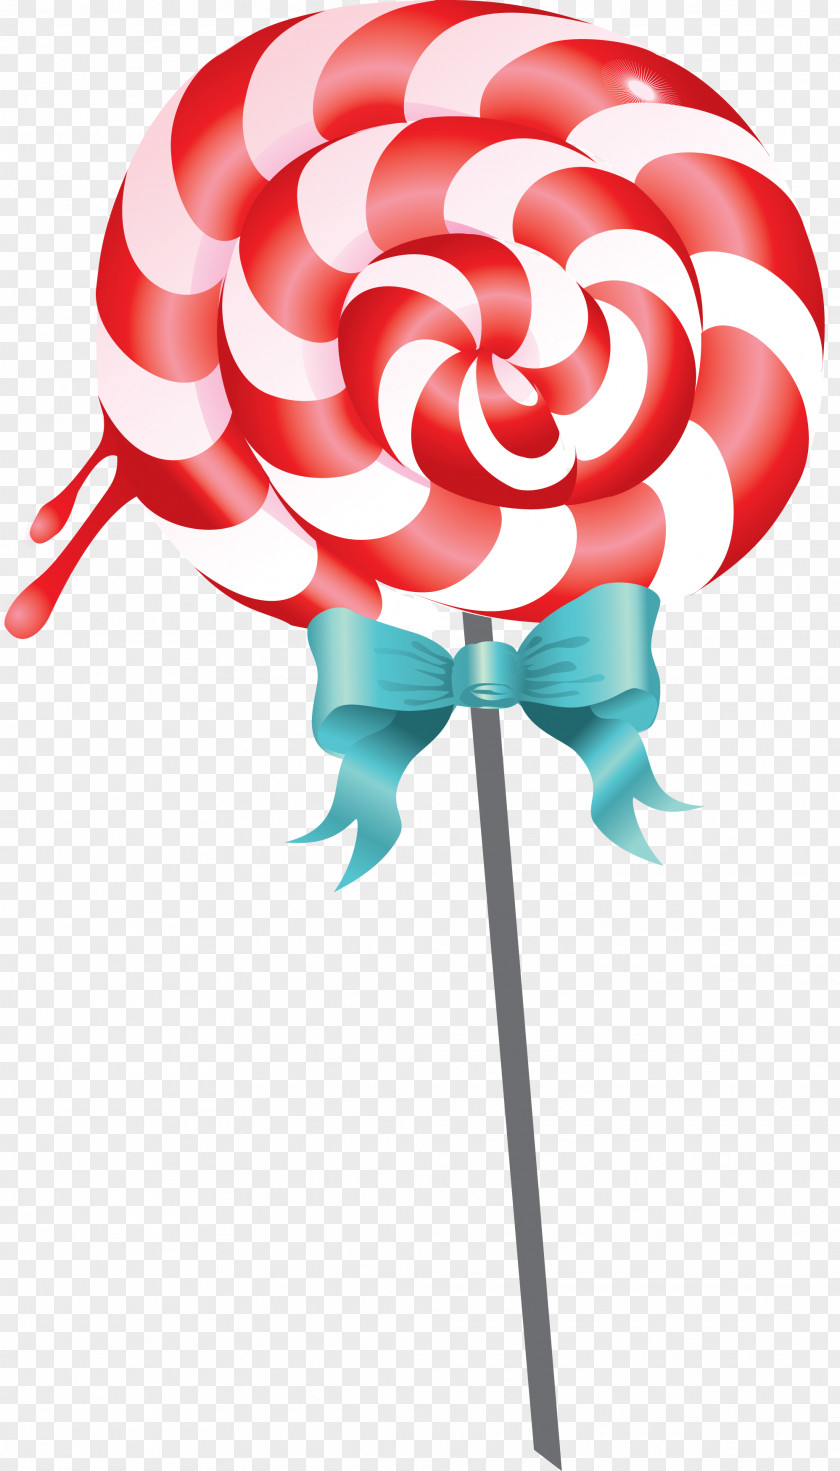 Lollipop Stick Candy PNG